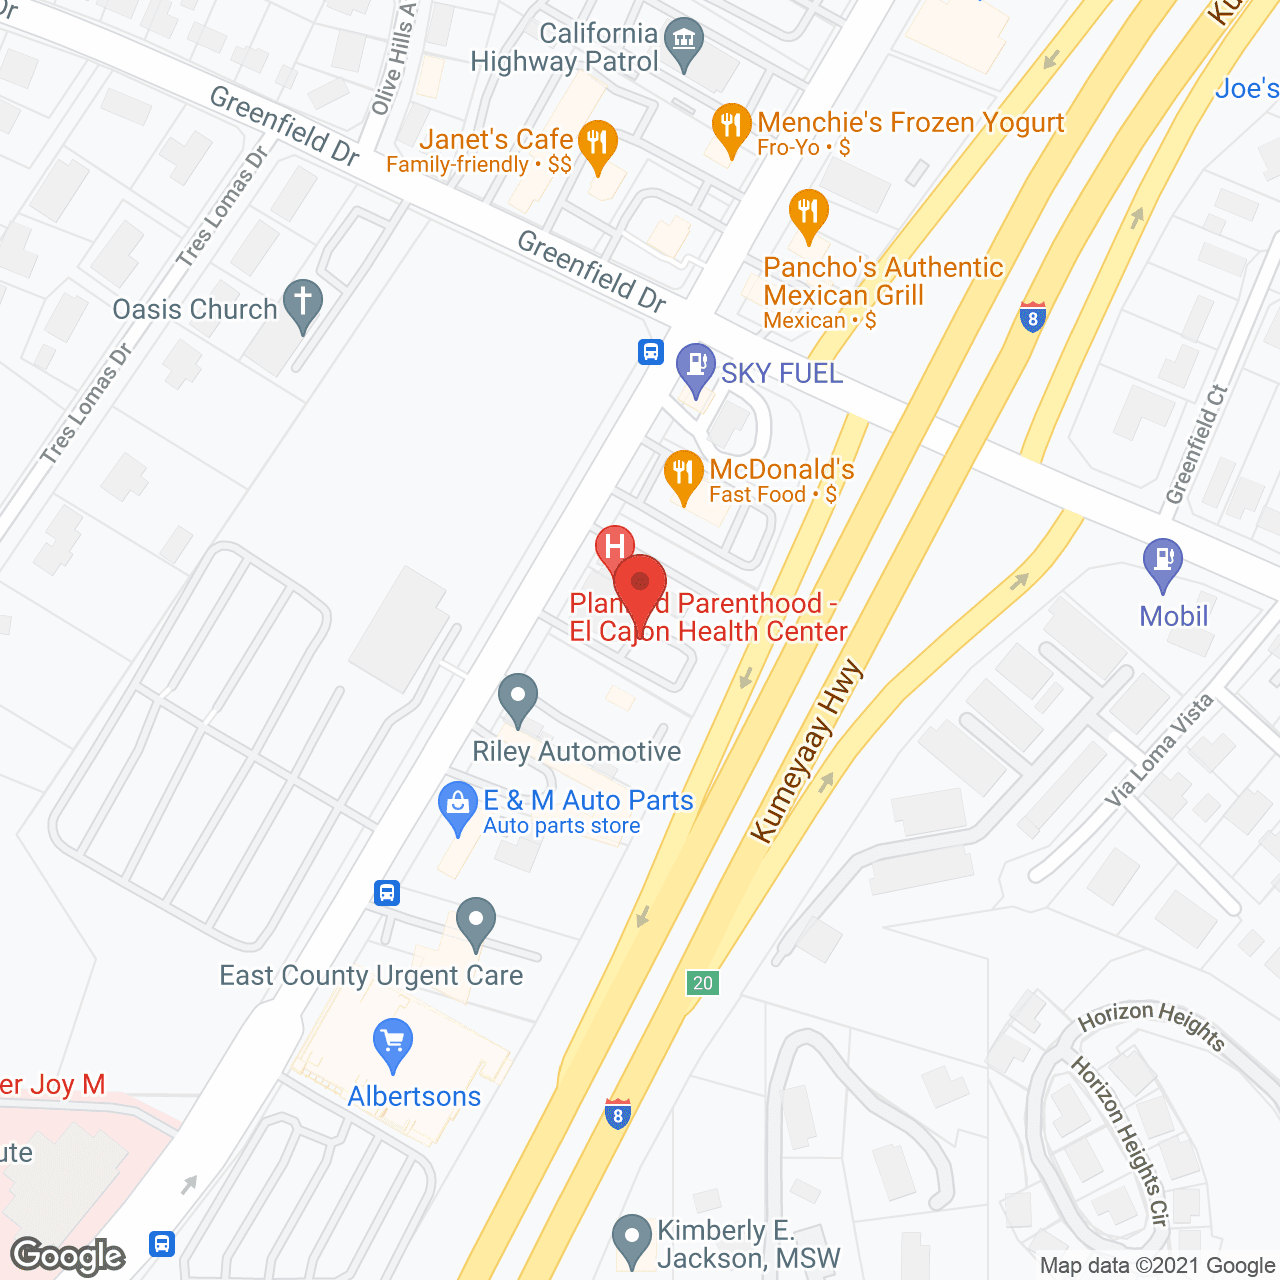 Visiting Angels - El Cajon in google map